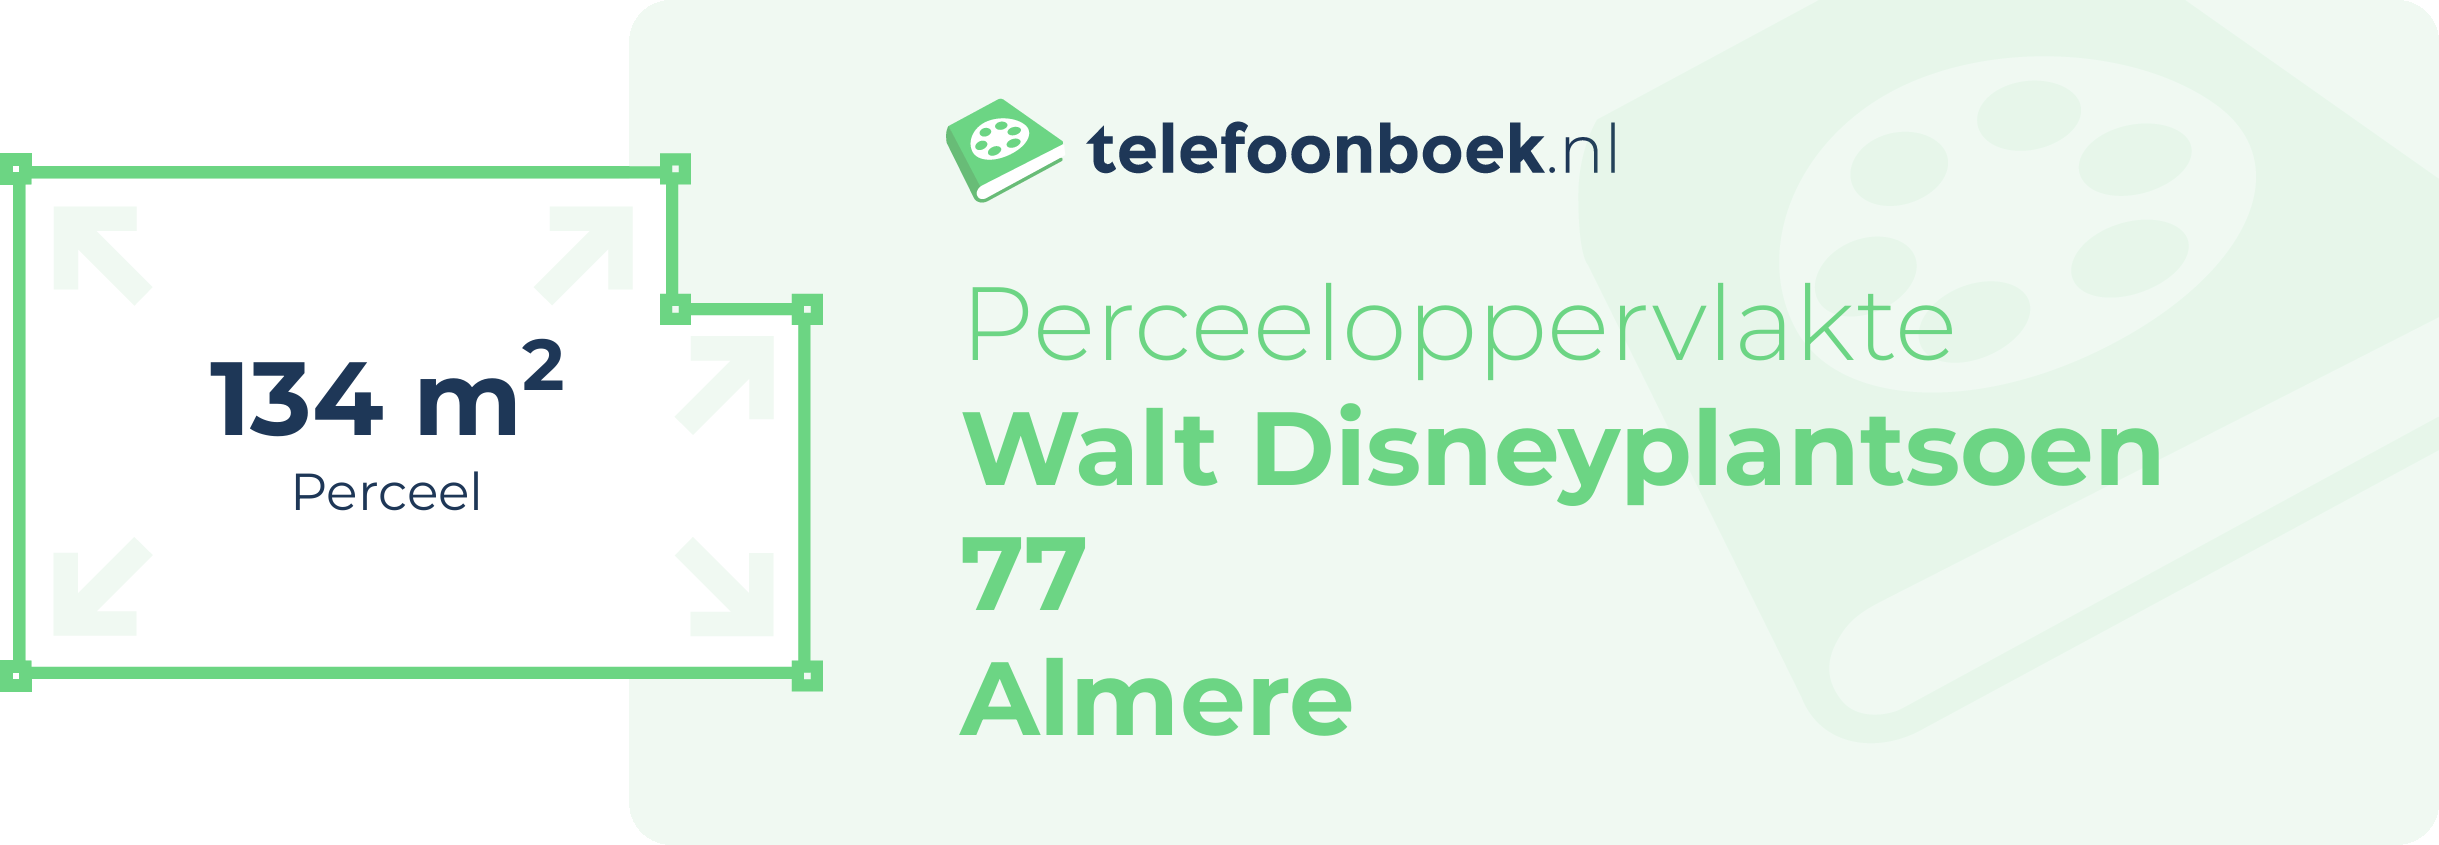 Perceeloppervlakte Walt Disneyplantsoen 77 Almere